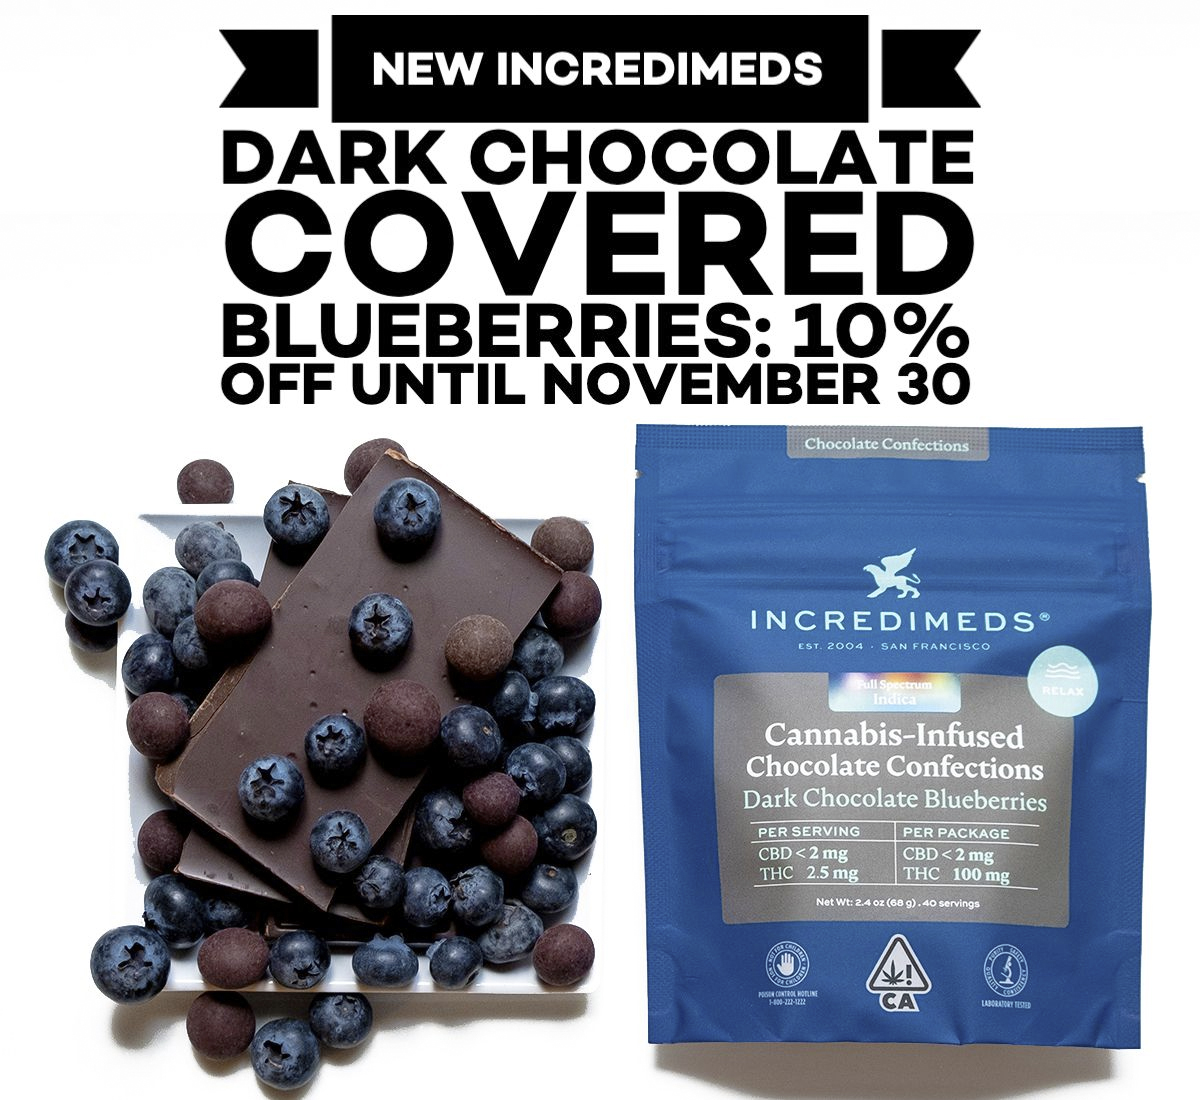 ncrediMeds Dark Chocolate Covered Blueberries